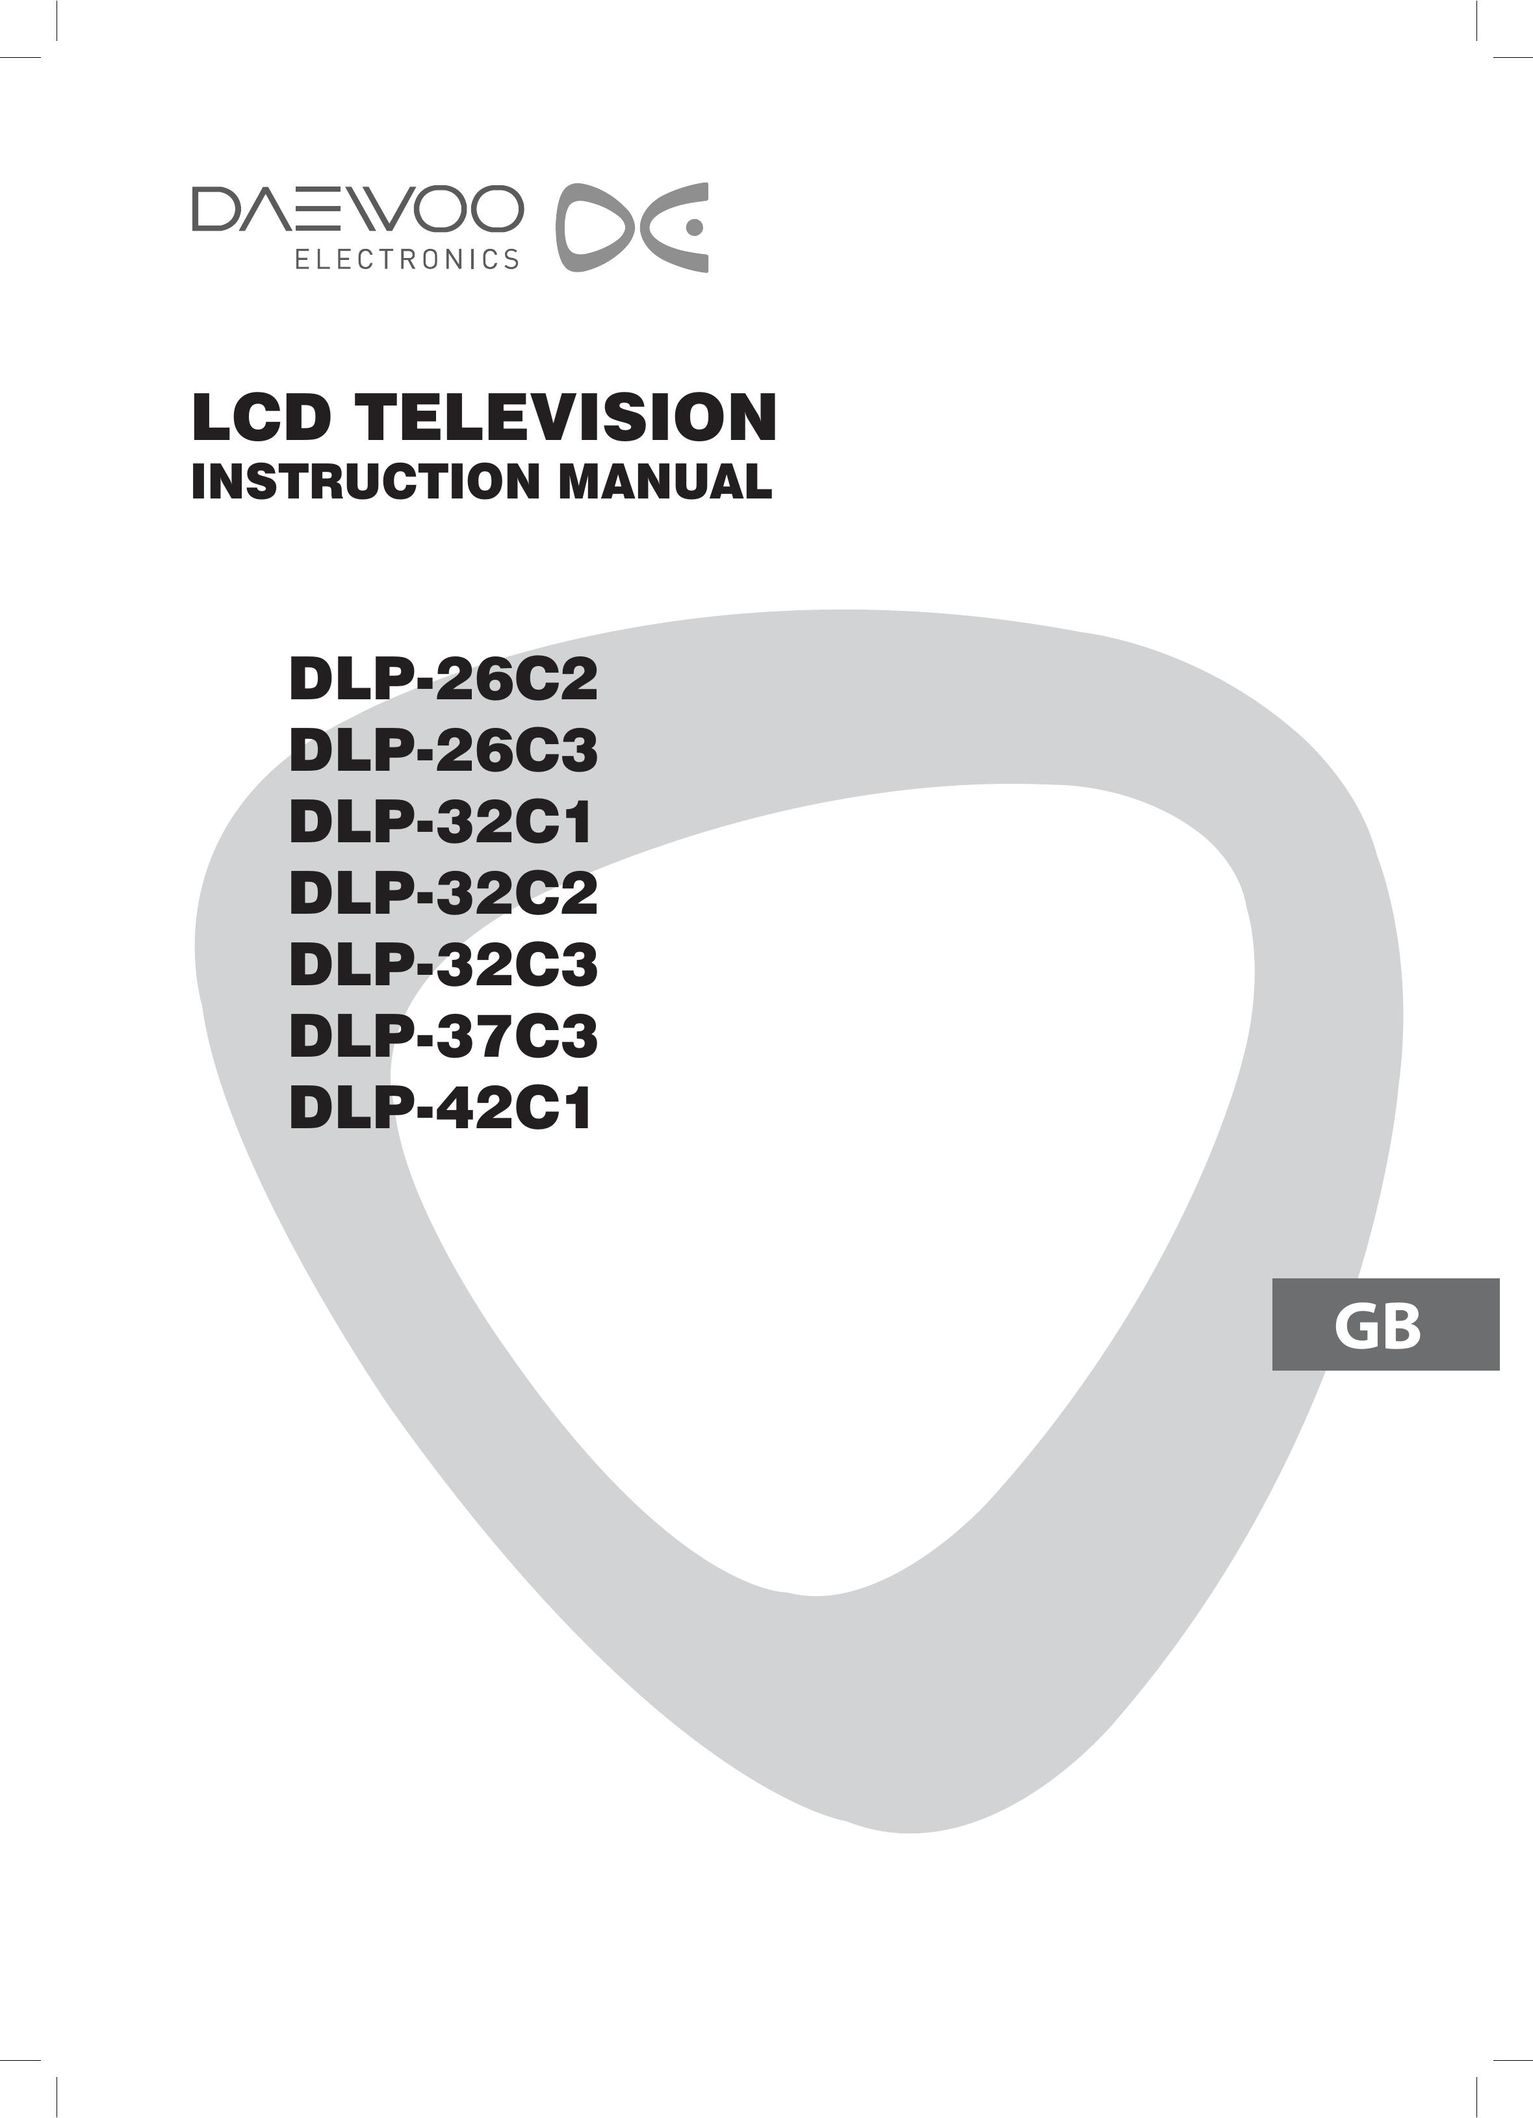 Daewoo DLP-26C3 Flat Panel Television User Manual